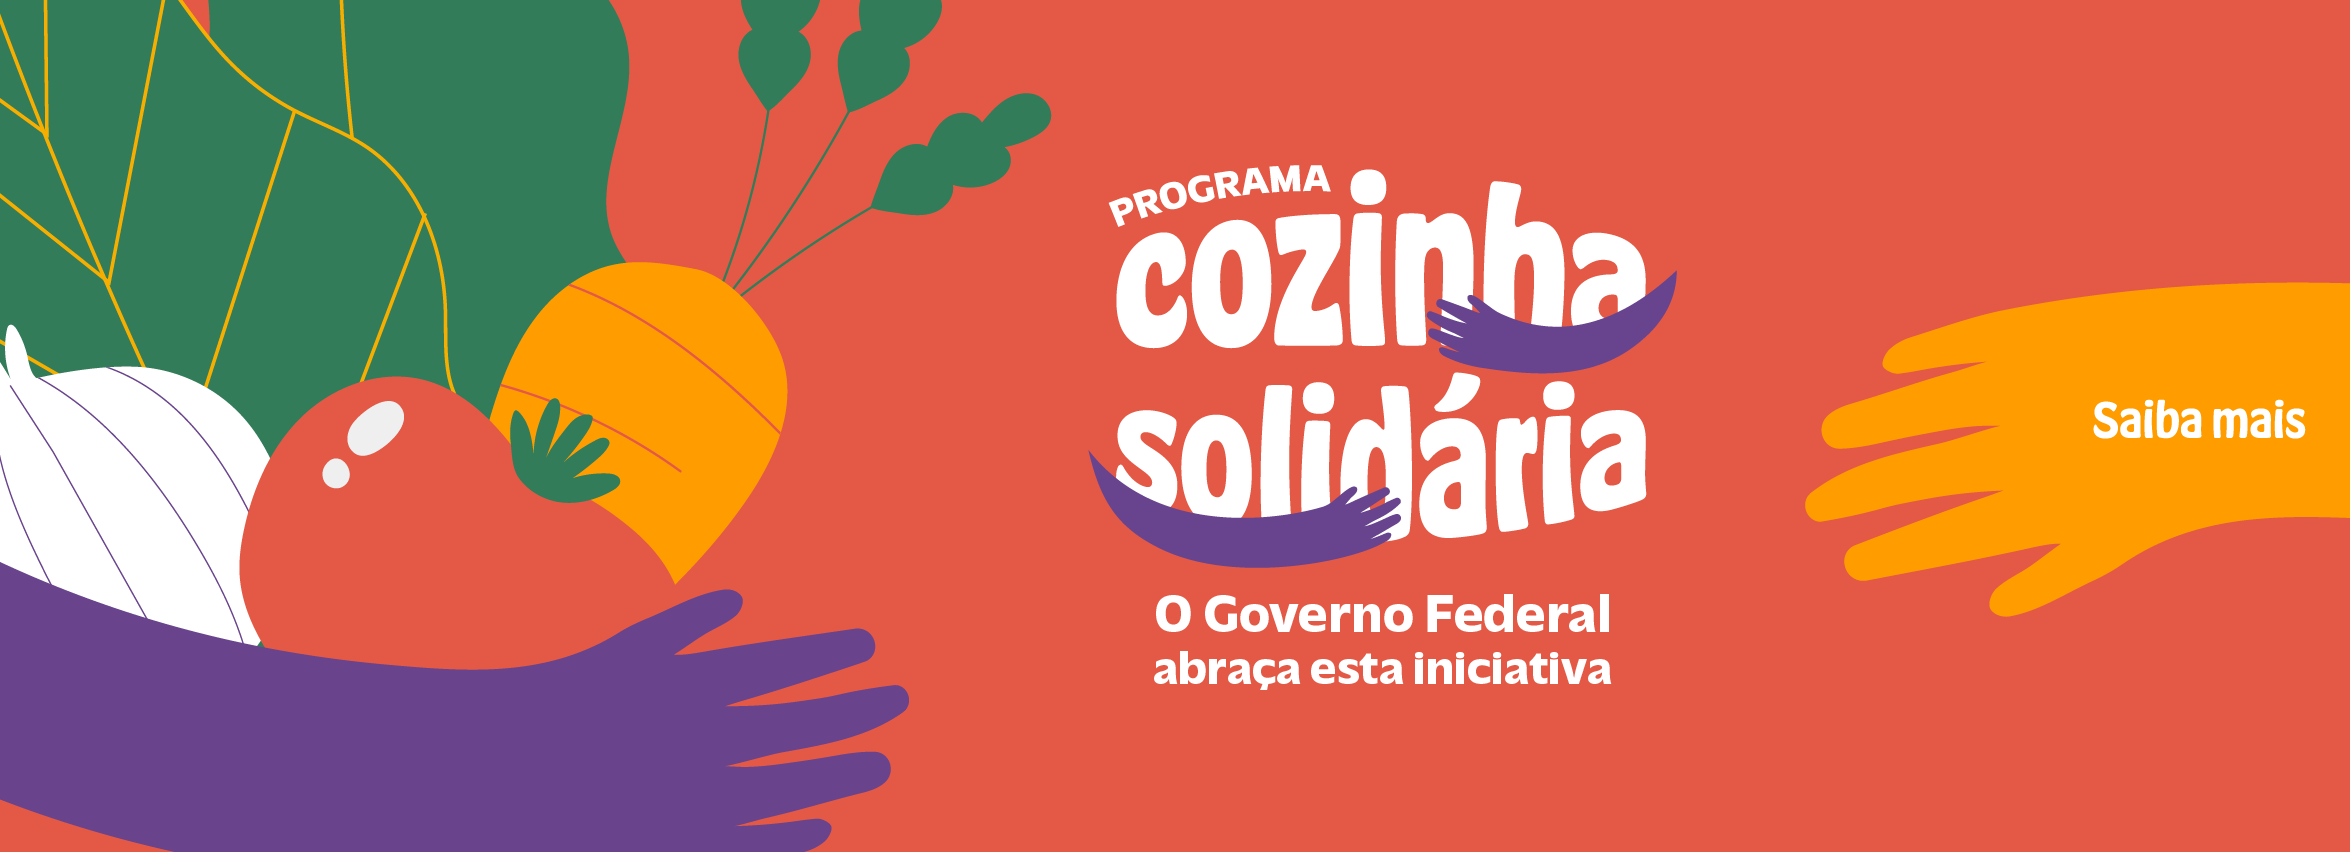 Banner Cozinha Solidaria